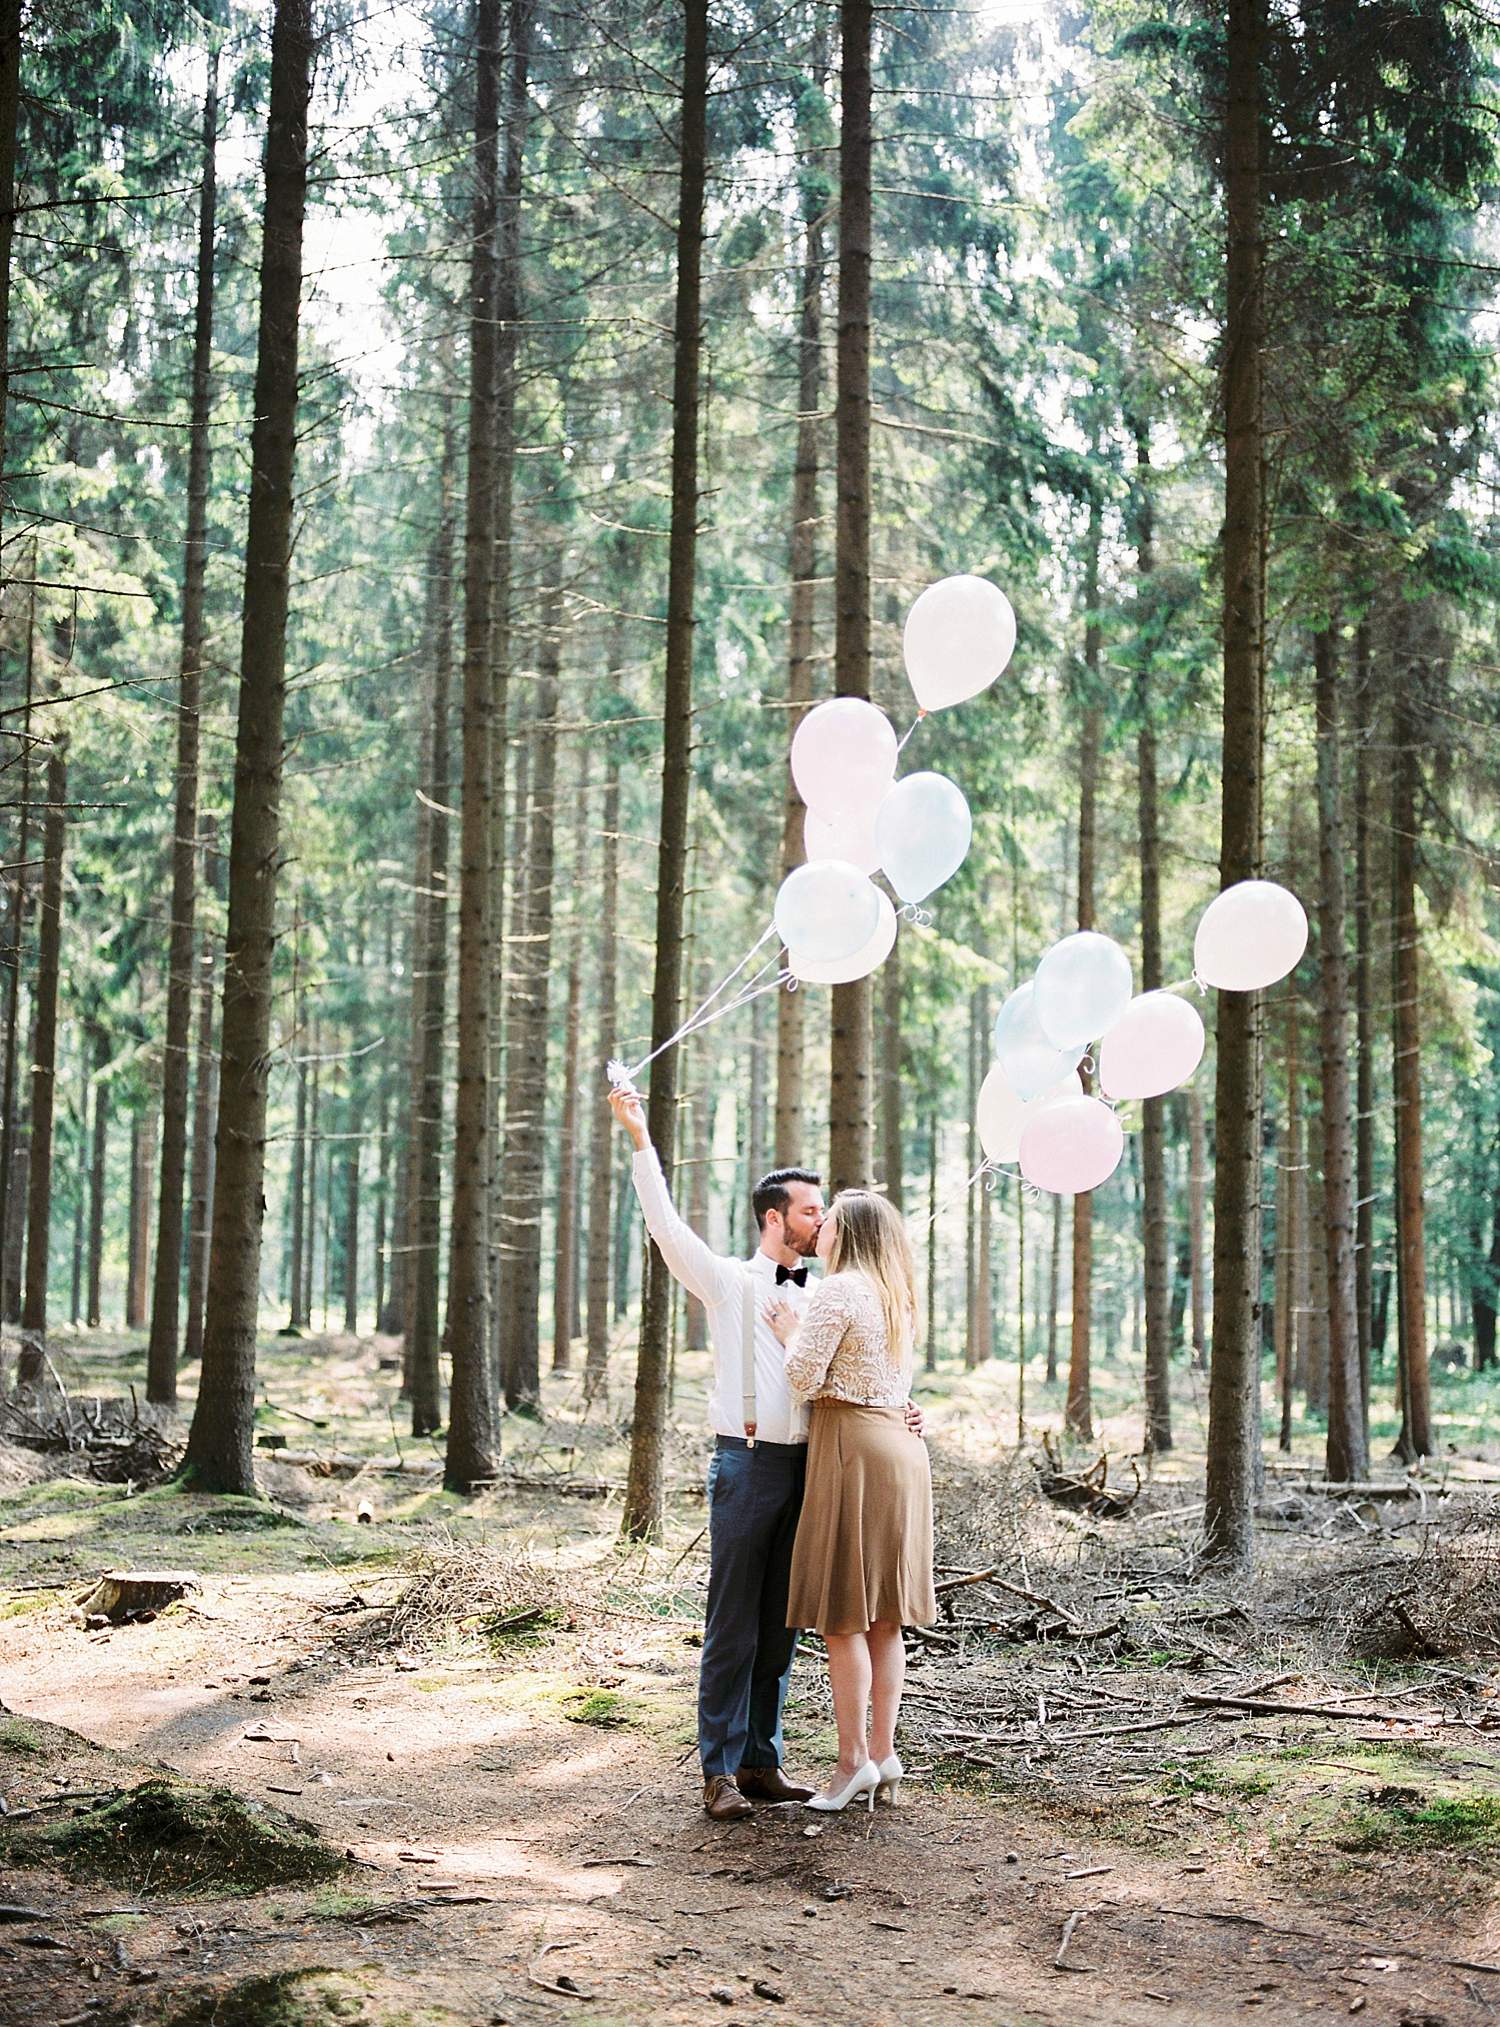 Wedding Photography holland - Romantic couple shoot